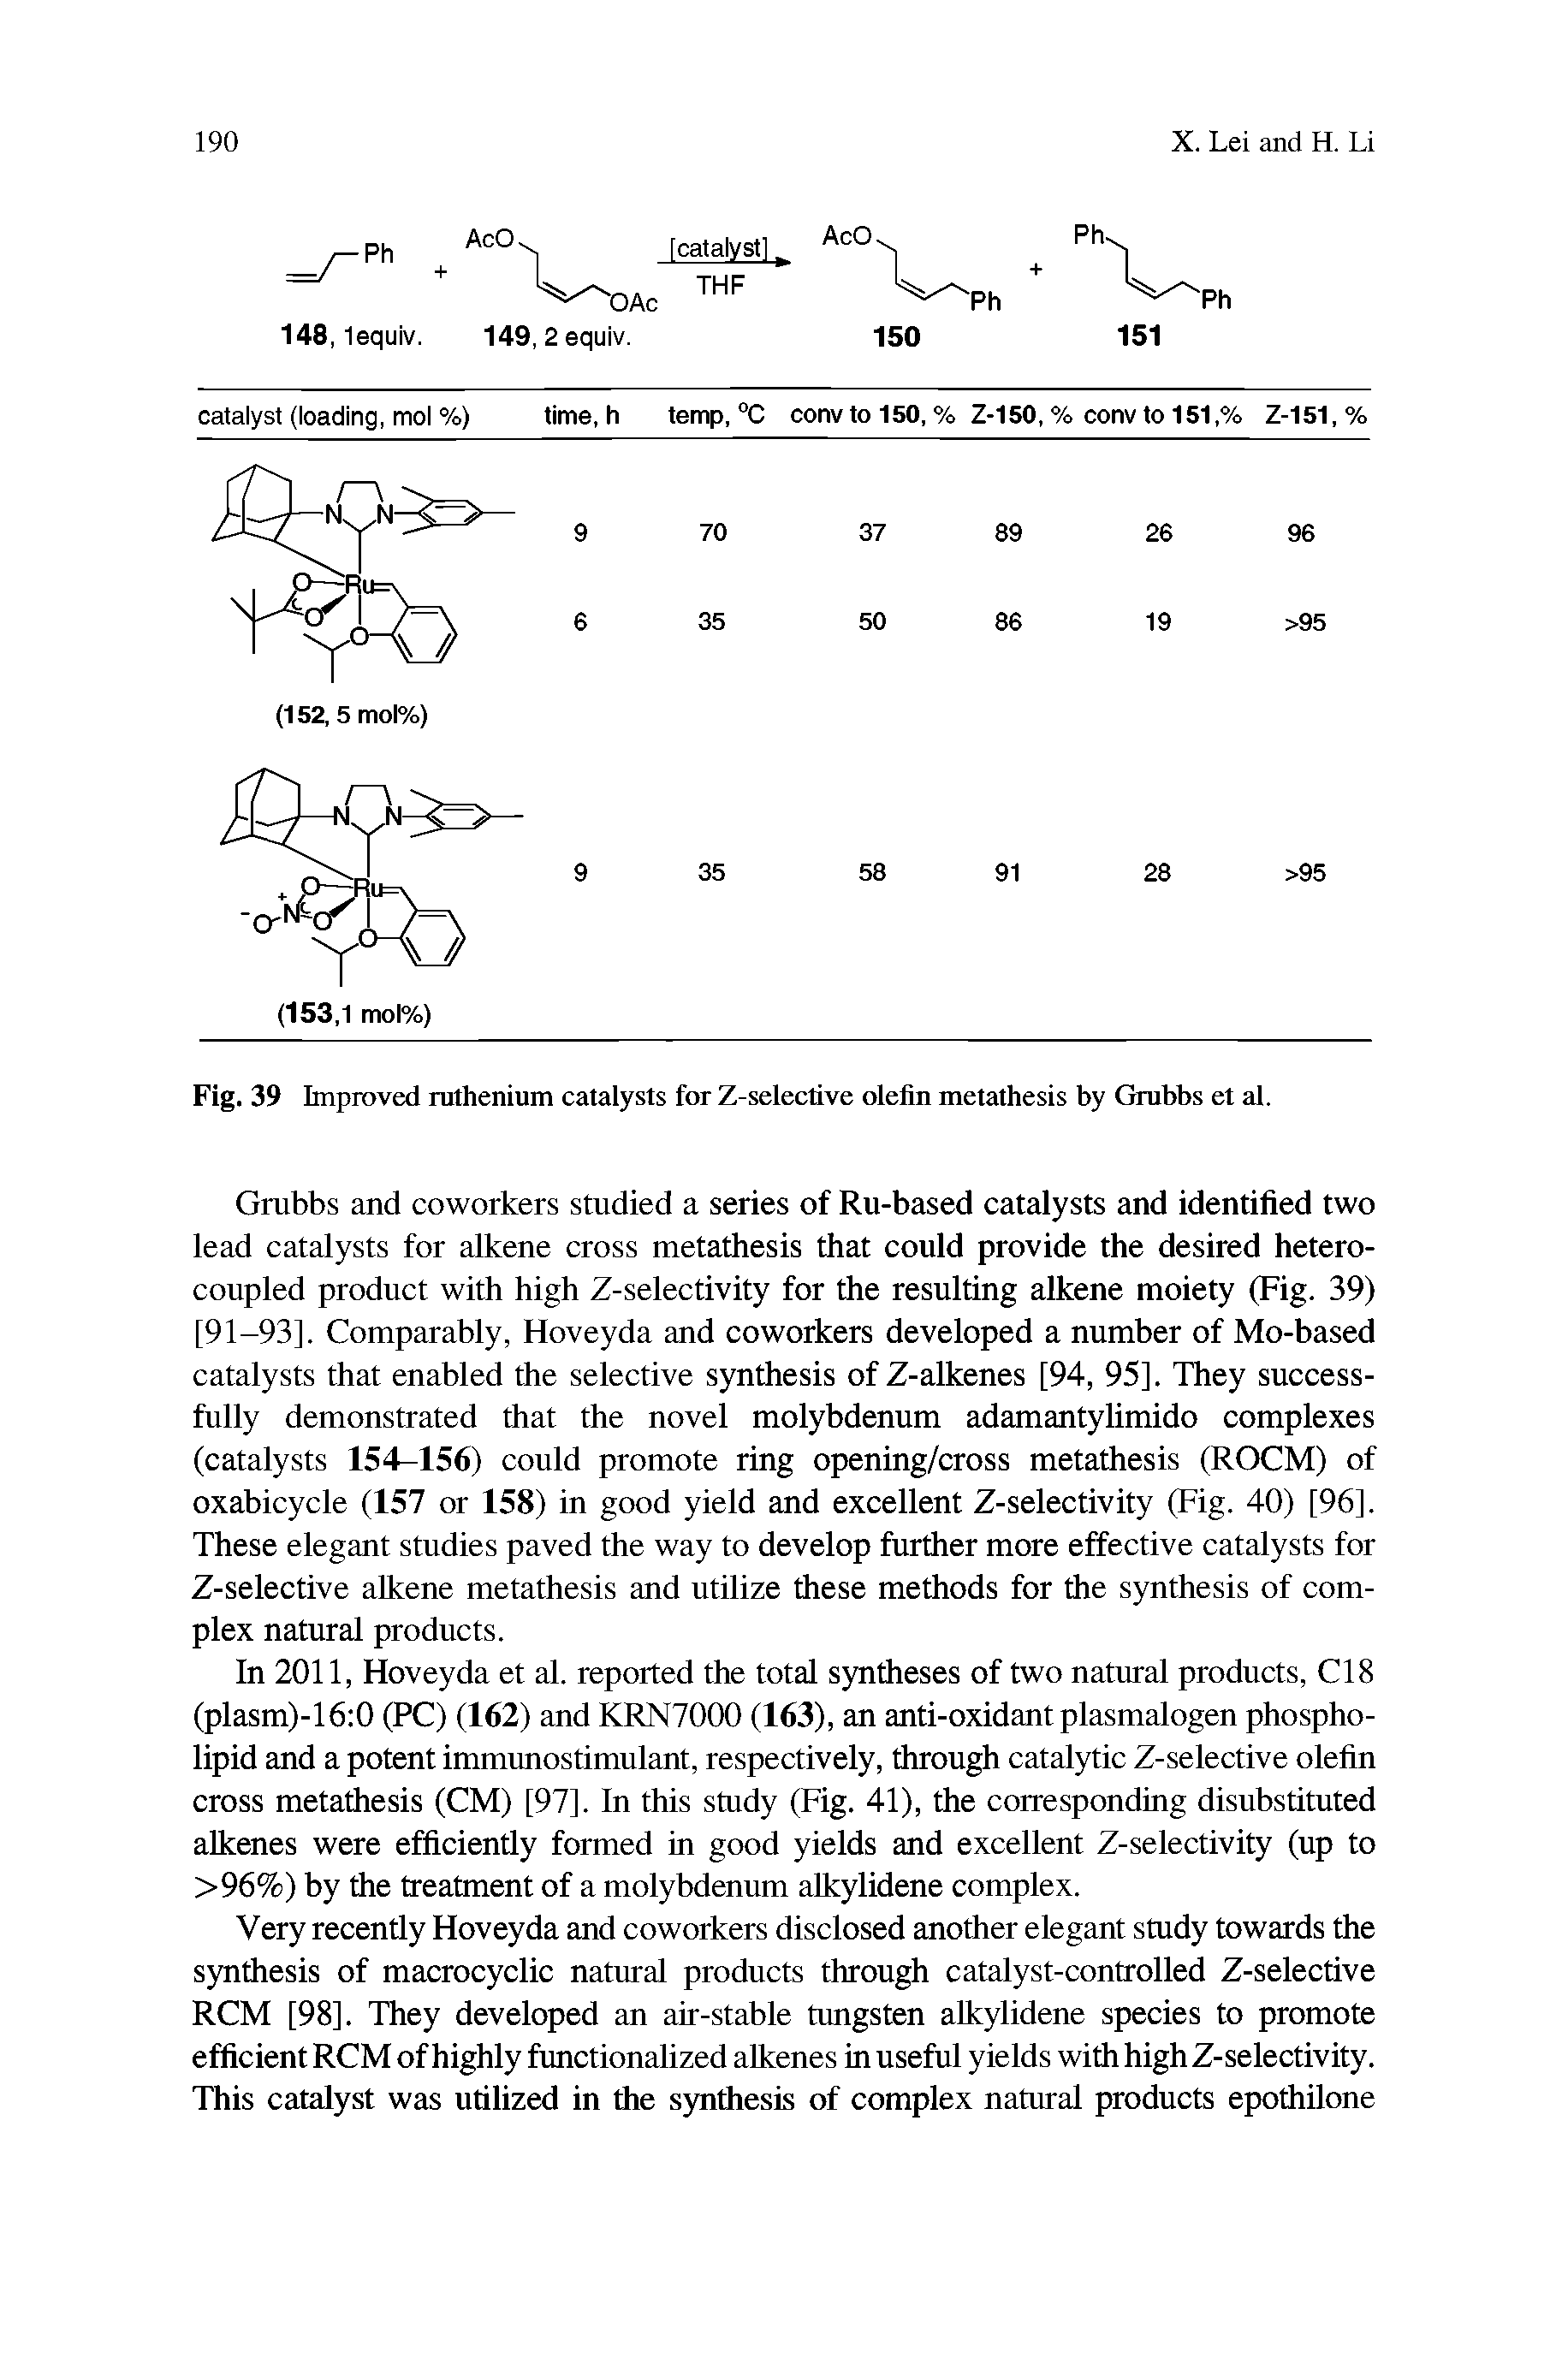 Fig. 39 Improved njthenium catalysts for Z-selective olefin metathesis by Grubbs et al.